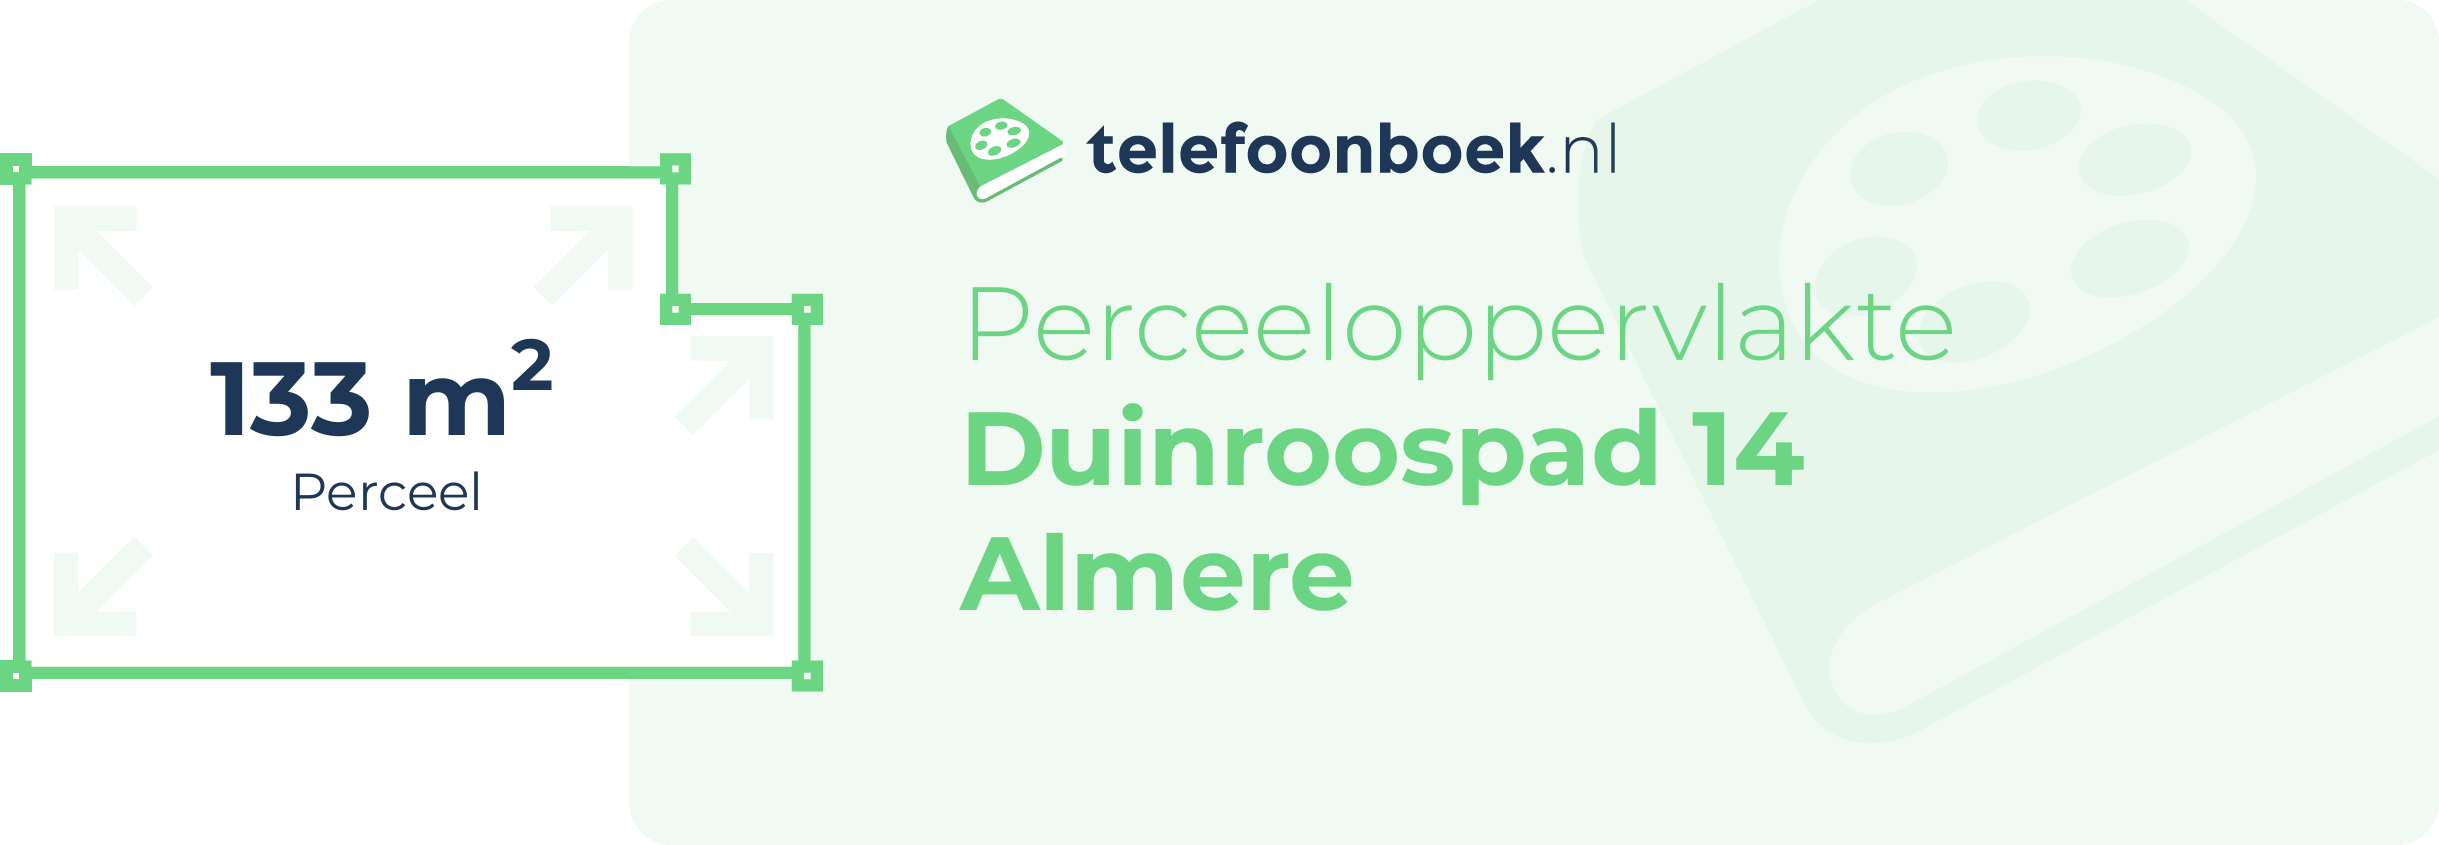 Perceeloppervlakte Duinroospad 14 Almere